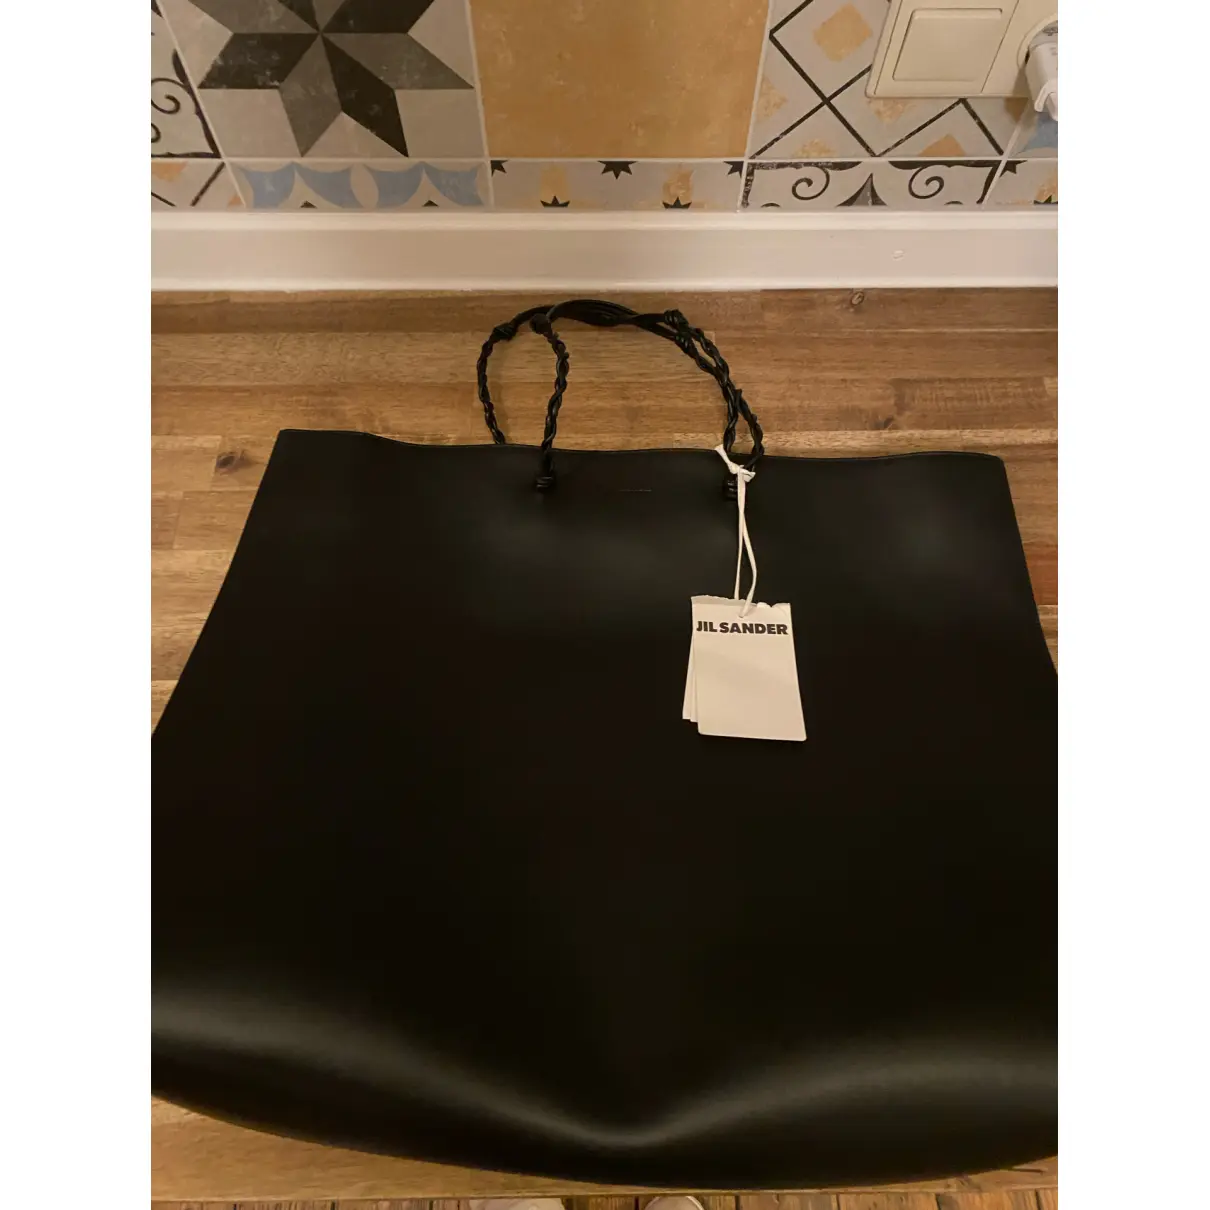 Buy Jil Sander Tangle leather handbag online